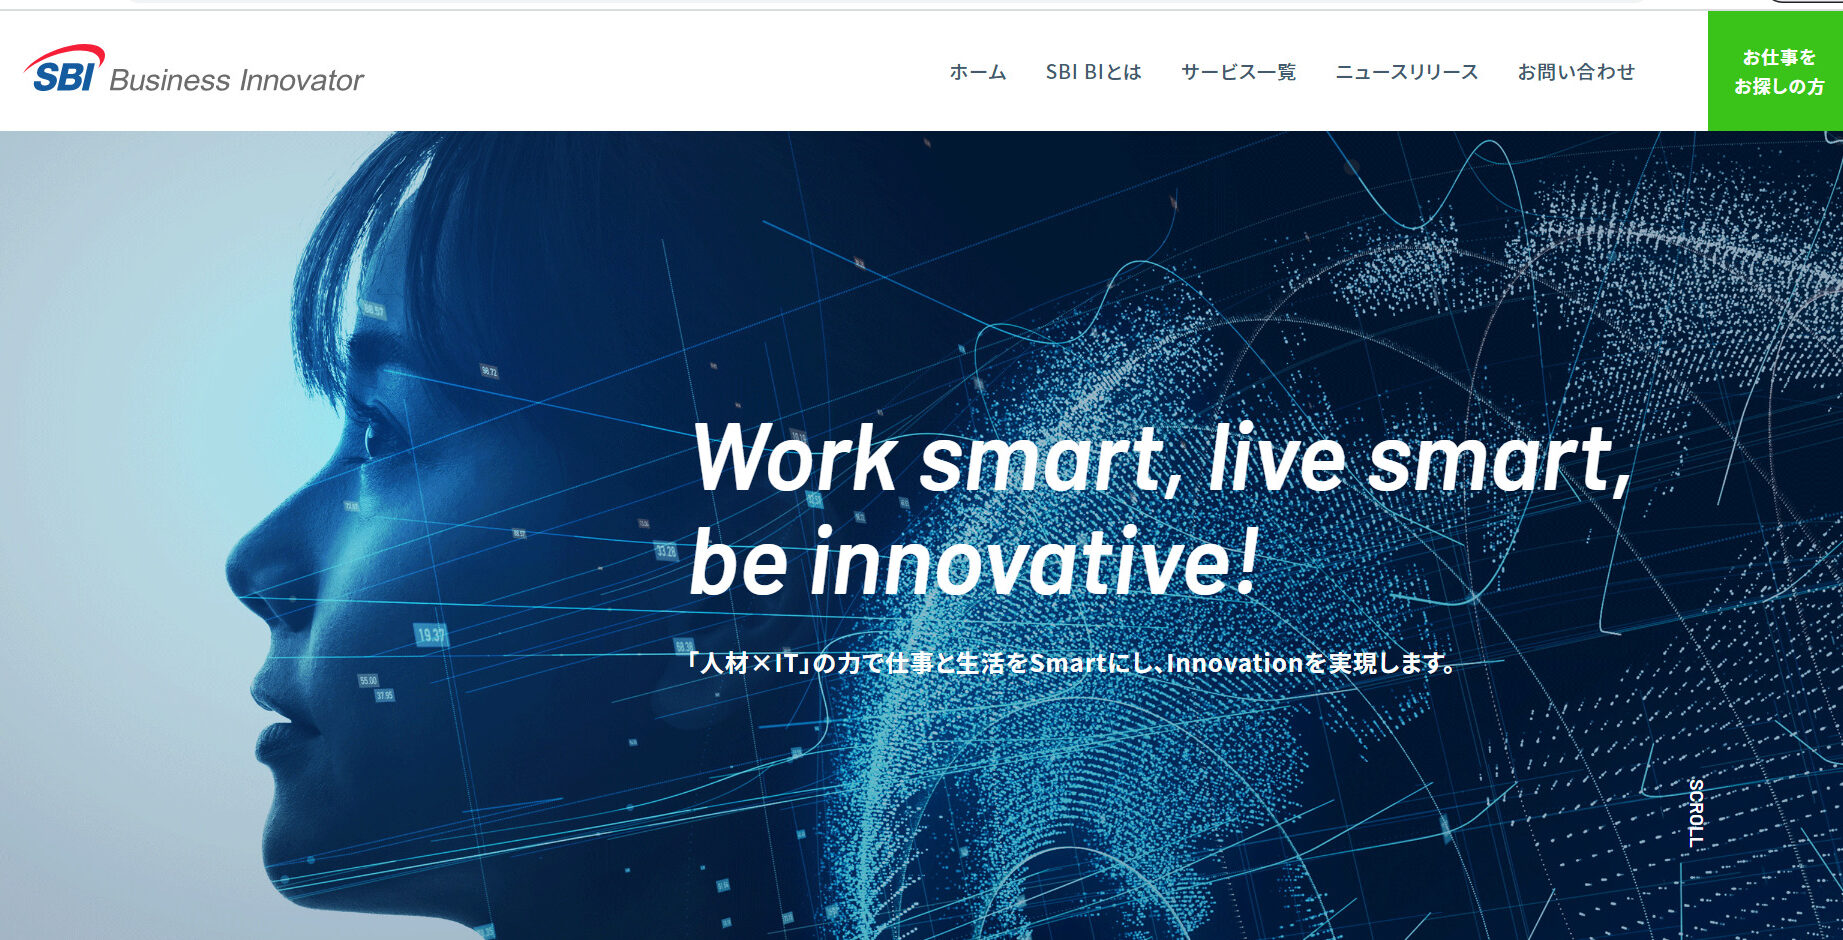 SBIビジネス・イノベータ株式会社のホームページ